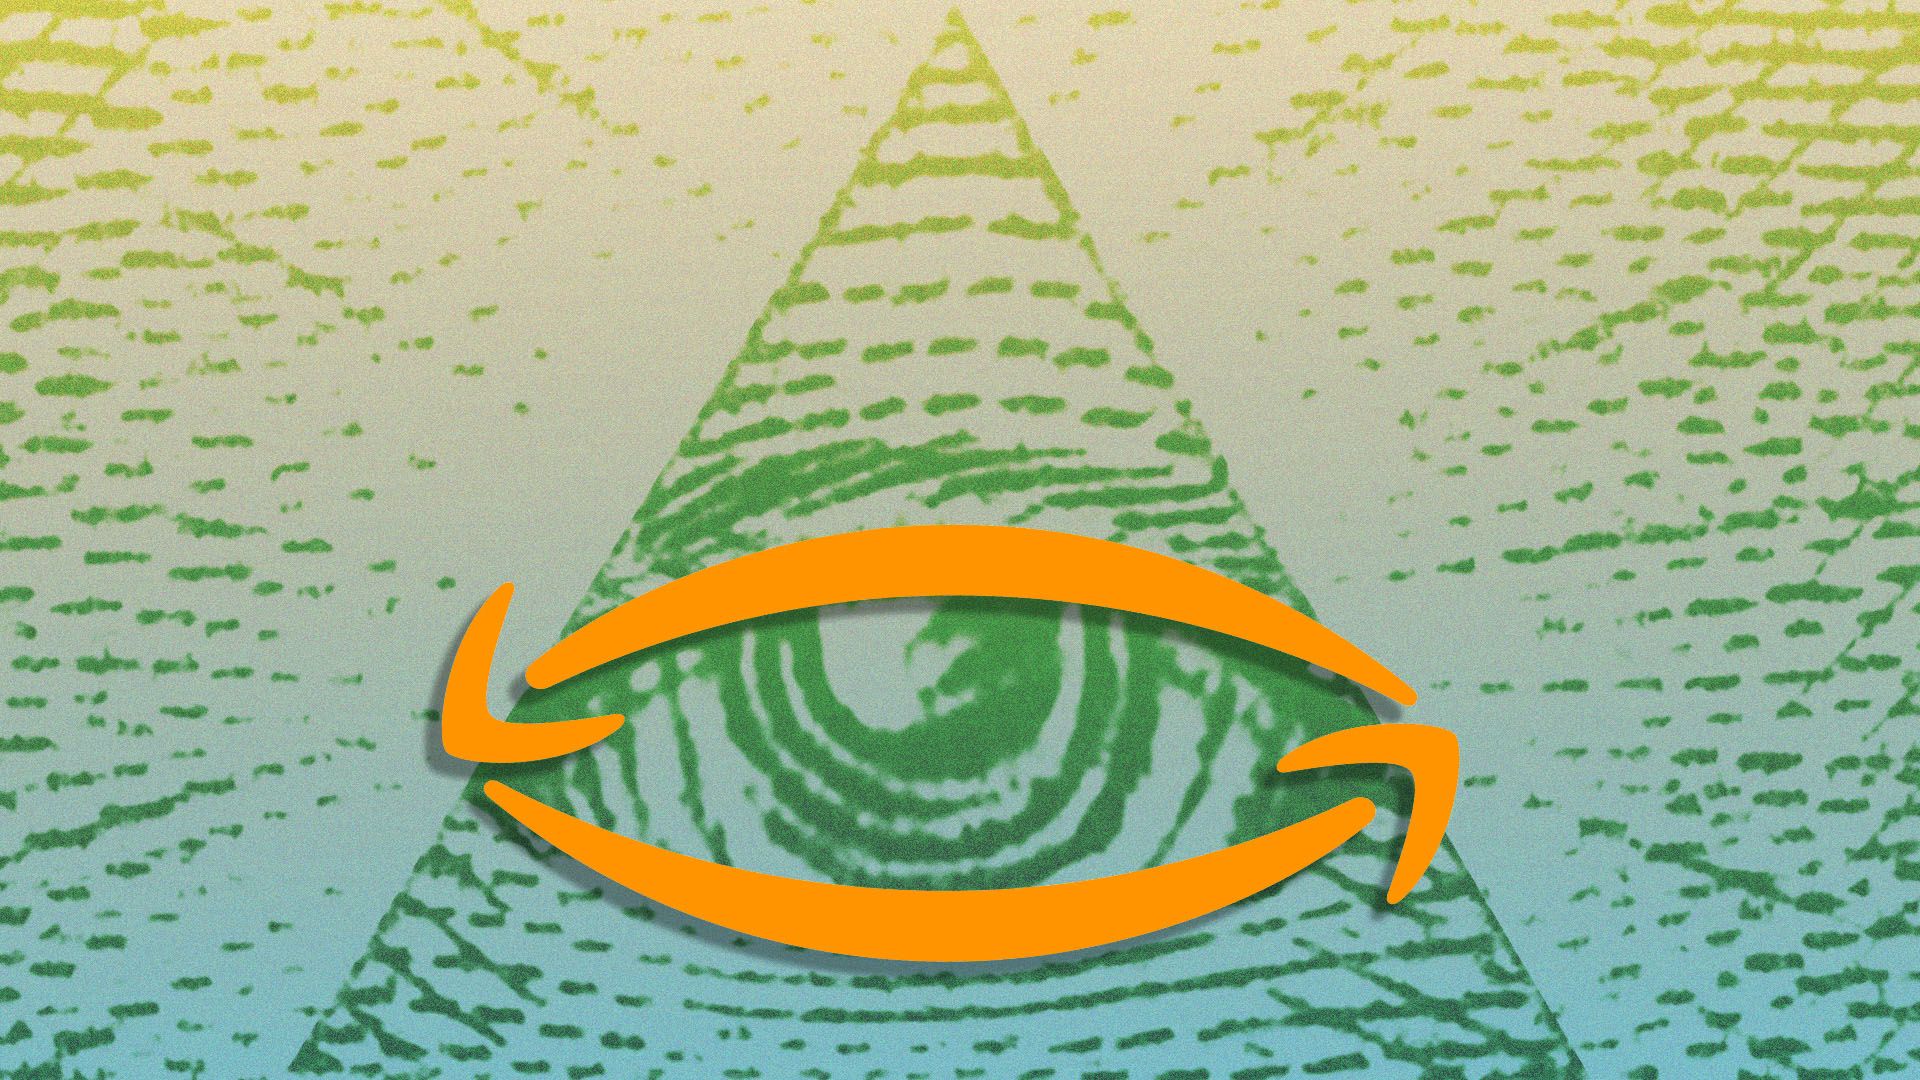 Illustration of the Amazon logo over the Eye of Providence